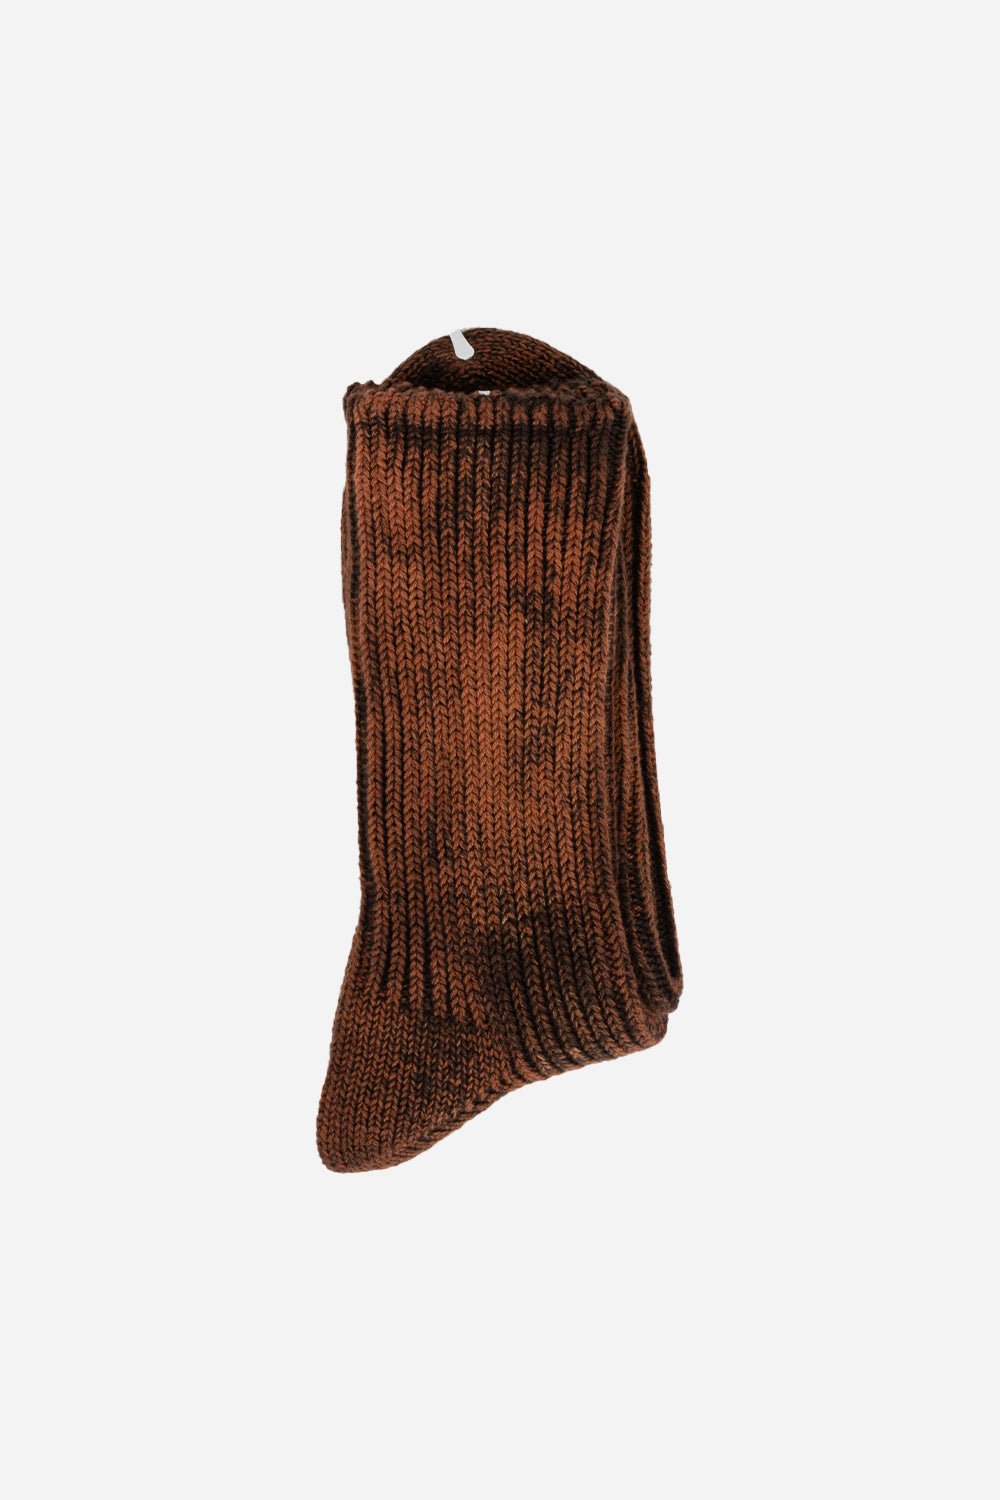 Rostersox-BA-brown-socks